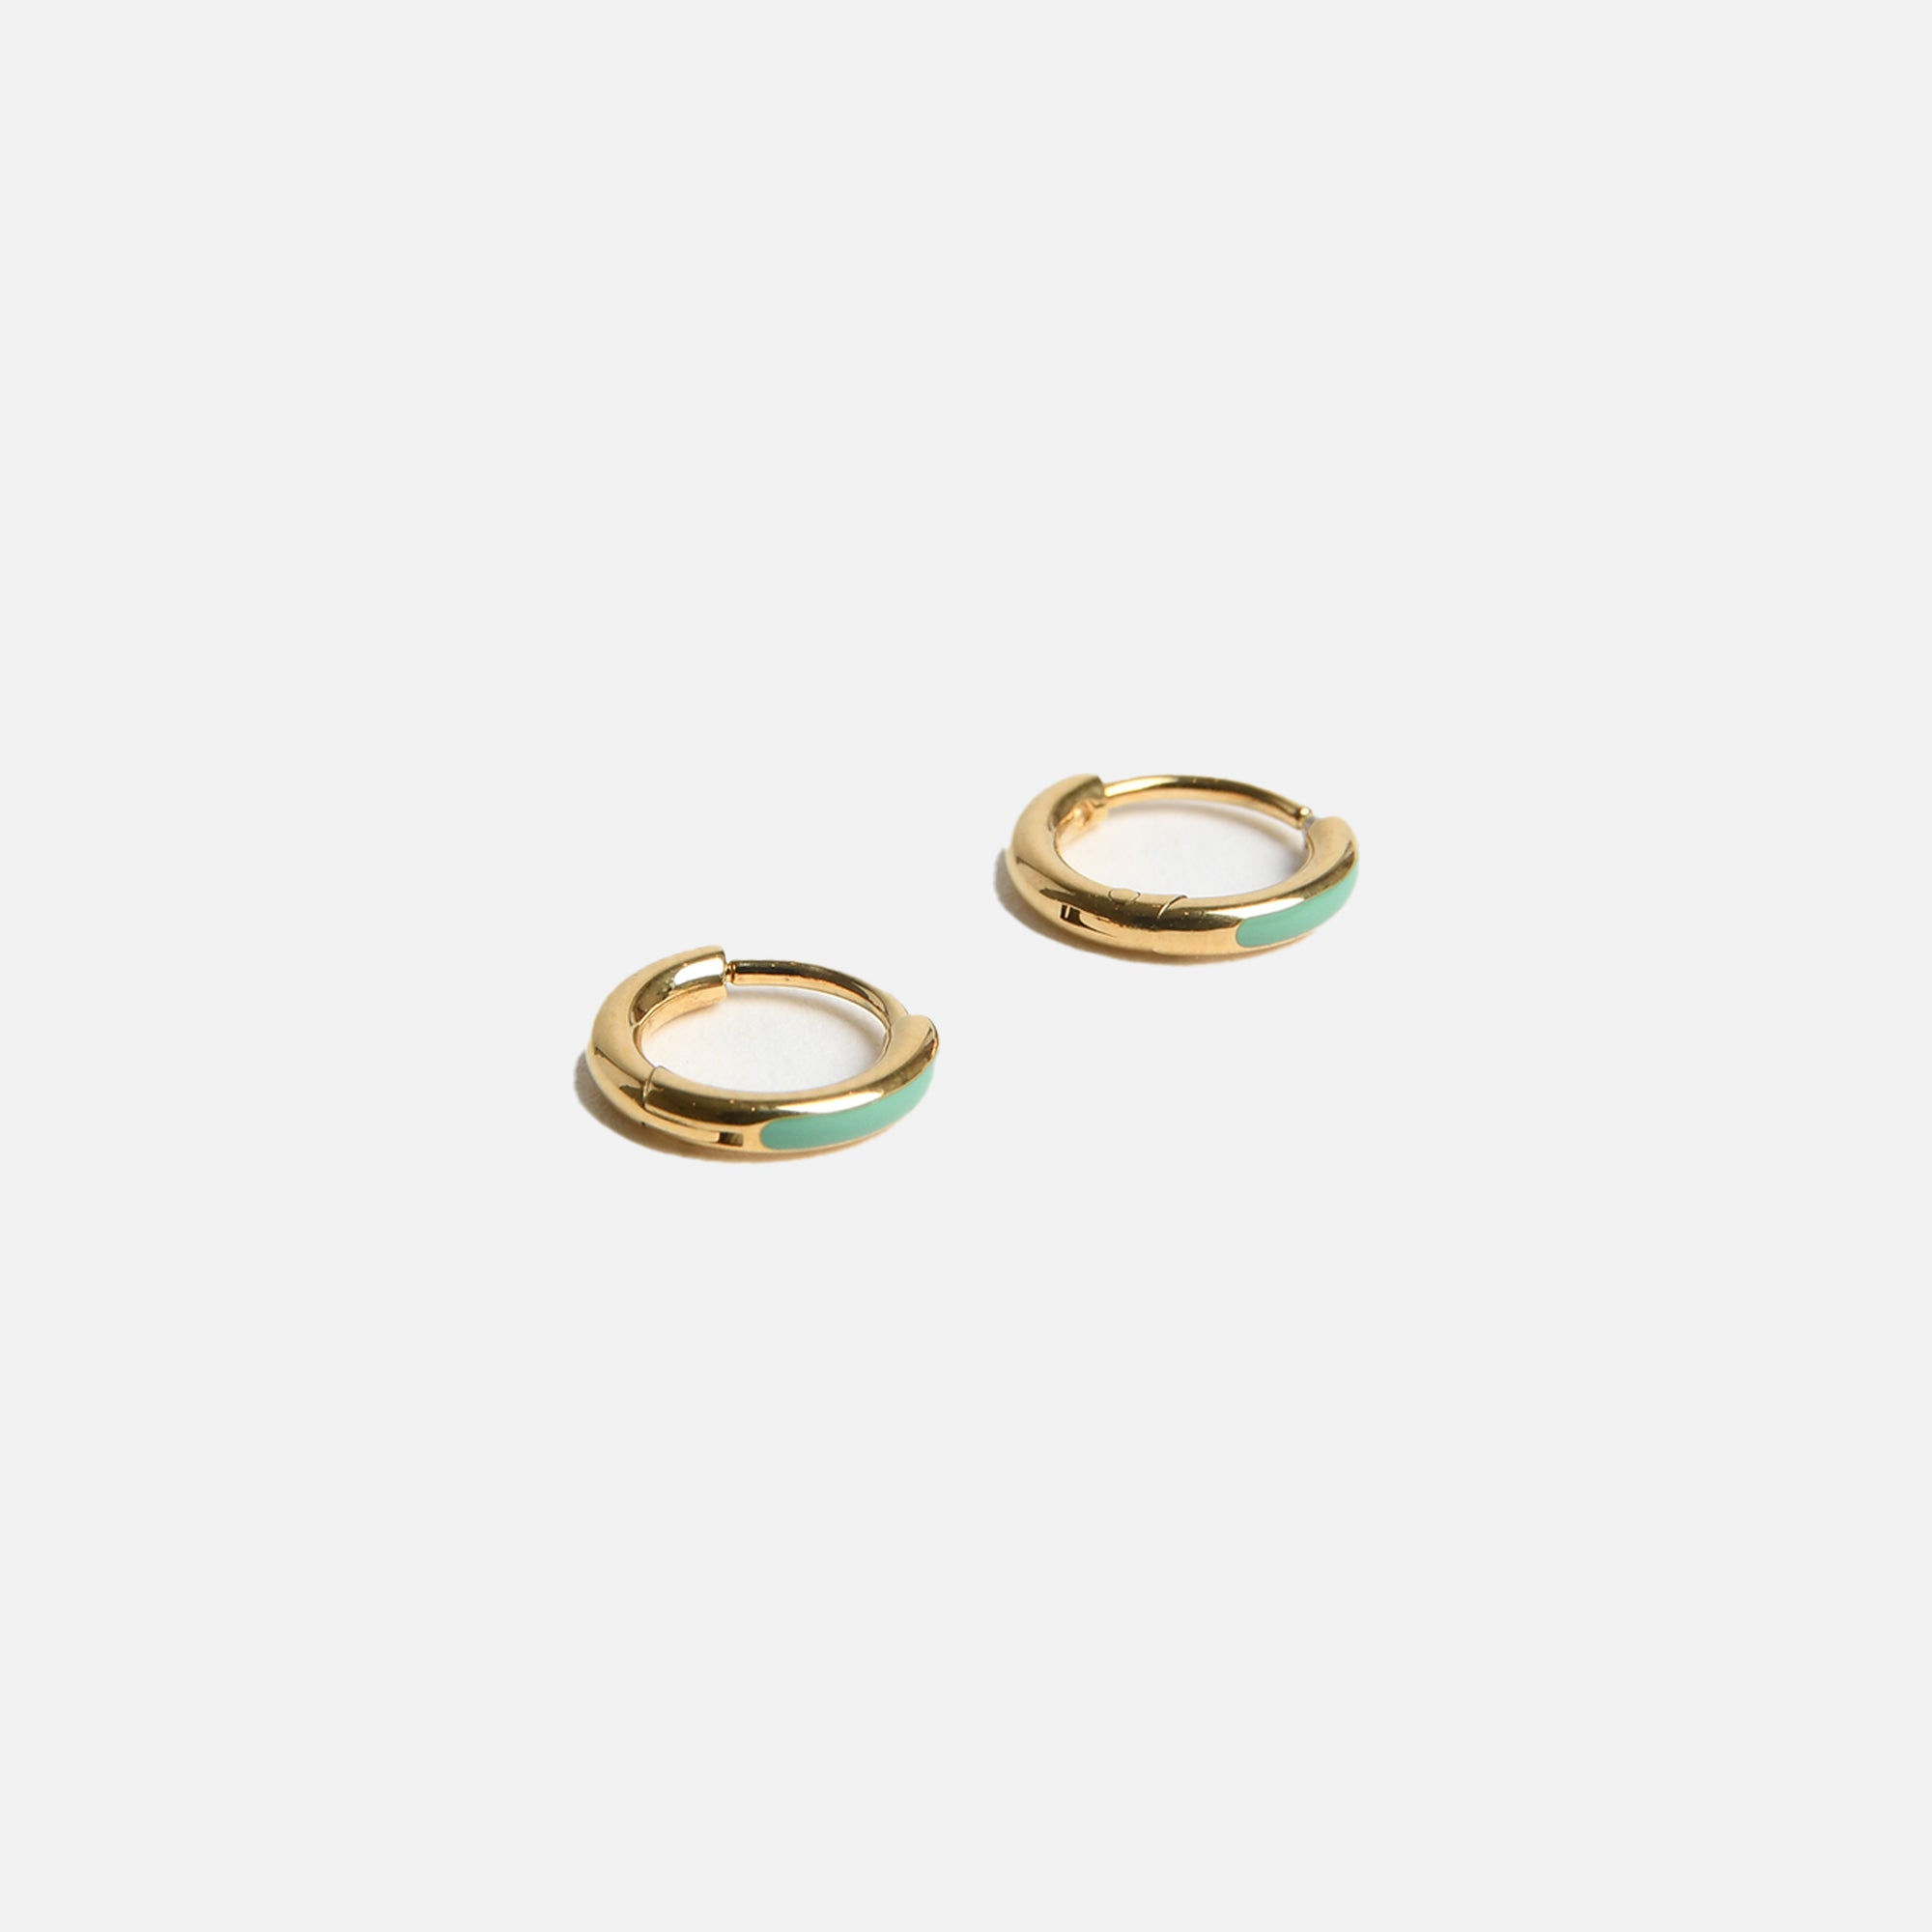 Mini golden stainless steel sleeper earrings with mint detail